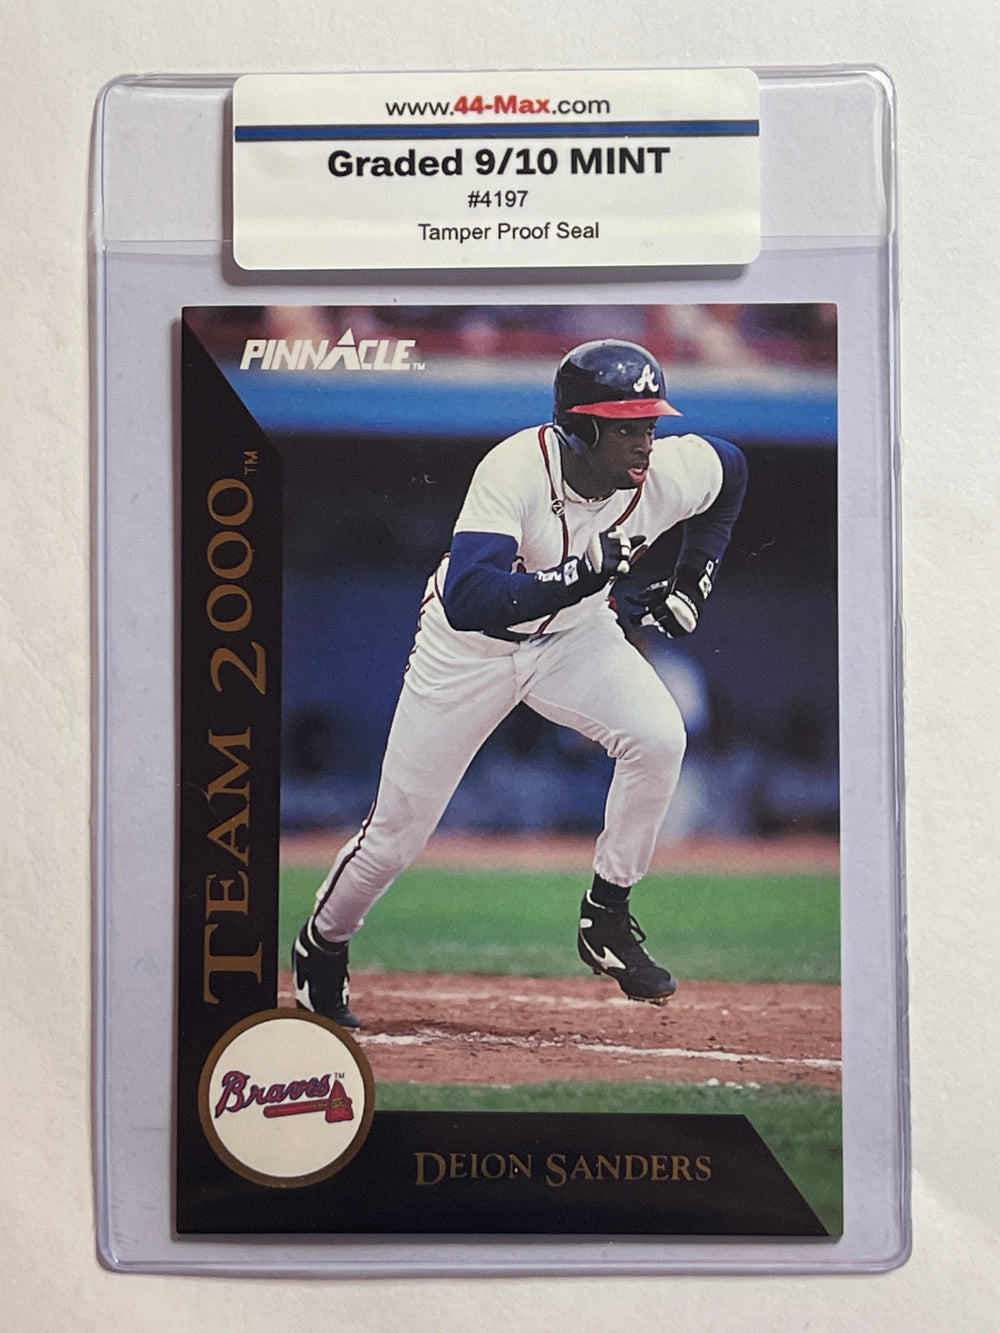 Deion Sanders Team2000 1992 Pinnacle Baseball Card. 44-Max 9/10 Mint #4197